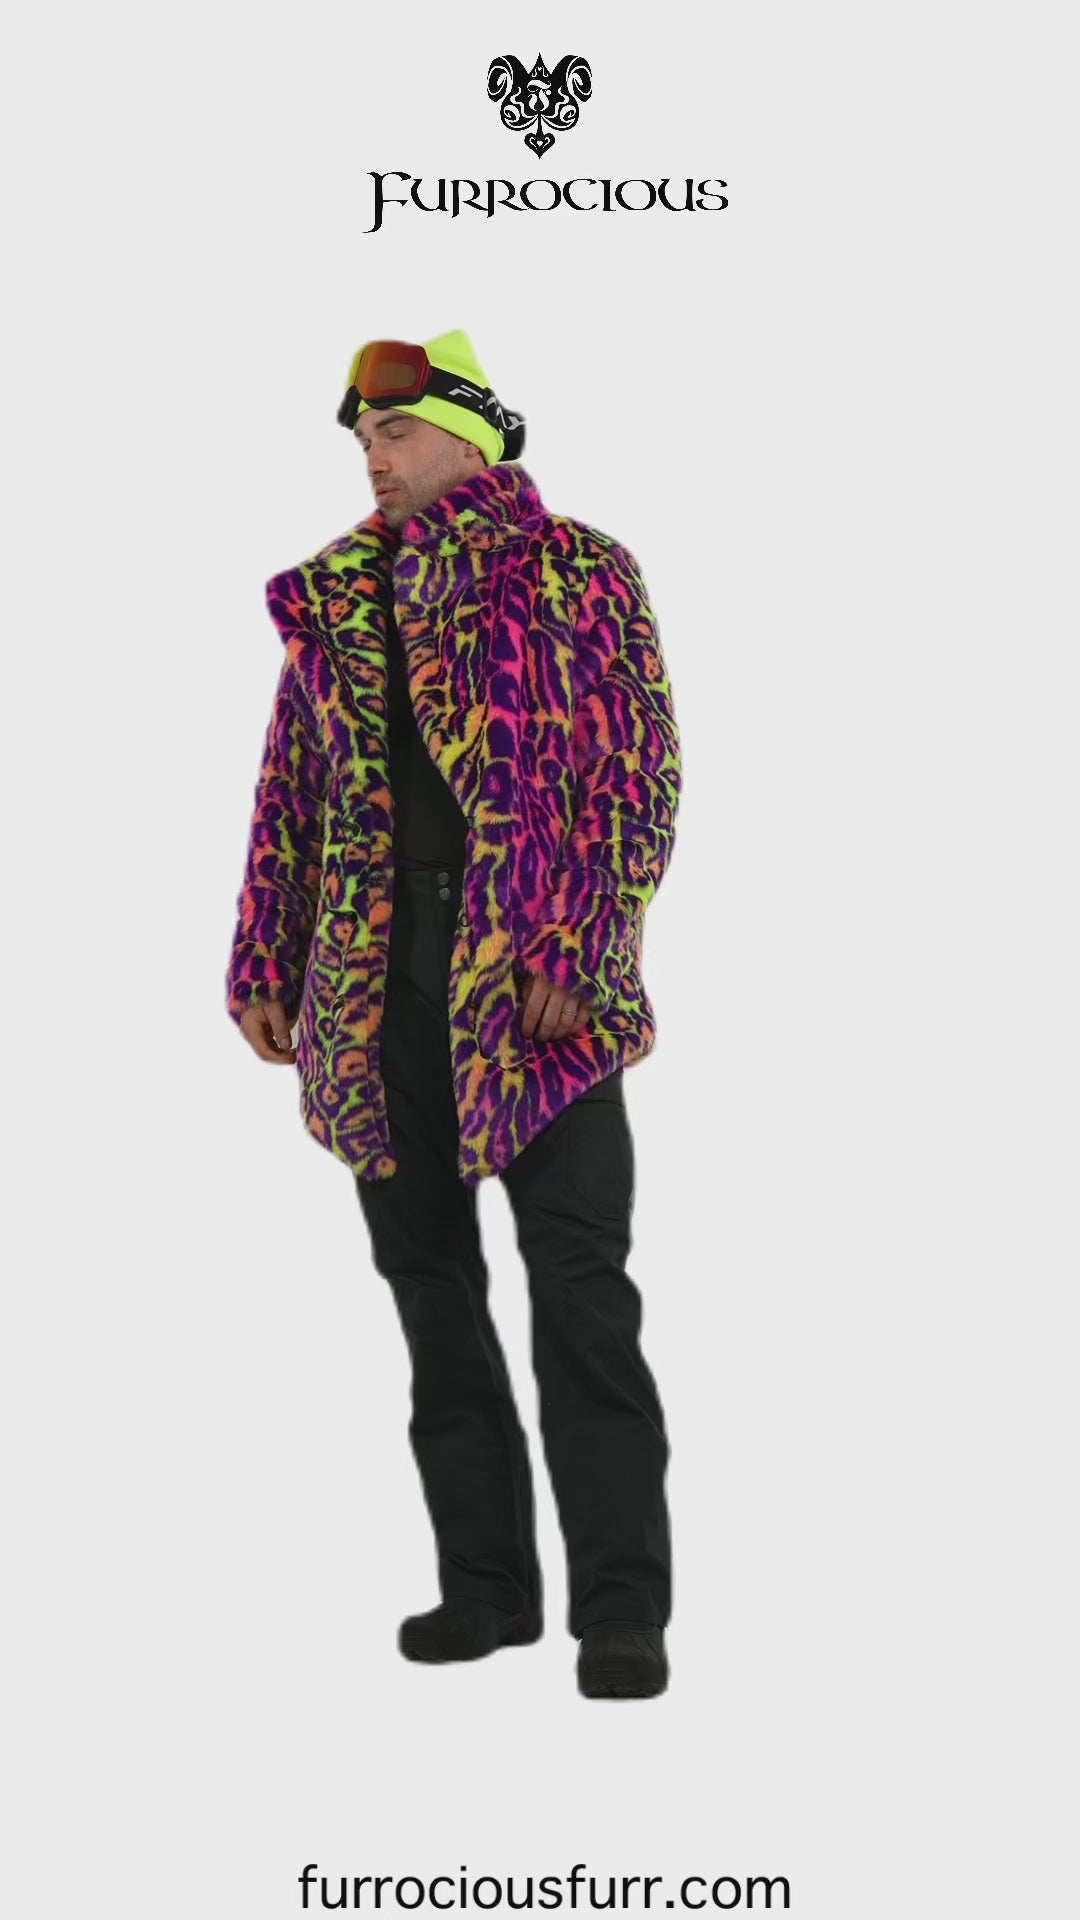 Men's Duke Coat in "Neon Cheetah"